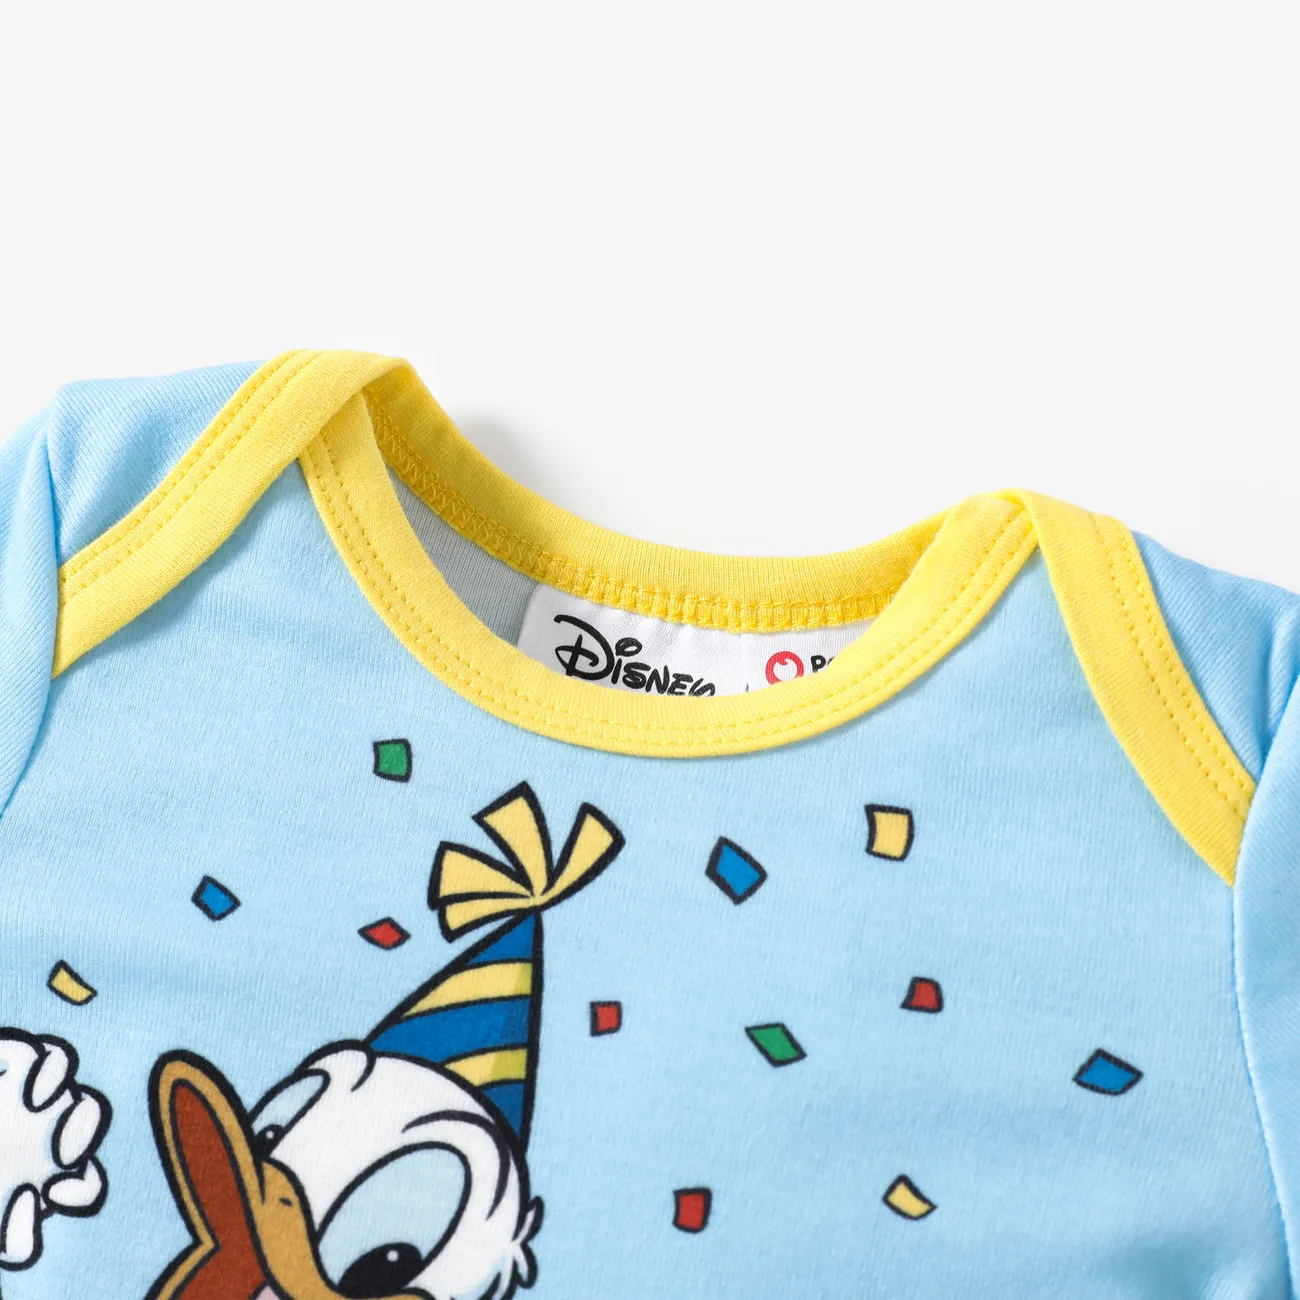 Disney Mickey and Friends Baby Boys/Girls Donald Duck 1pc Naia™ 90's Birthday Cake Print Romper Blue big image 1